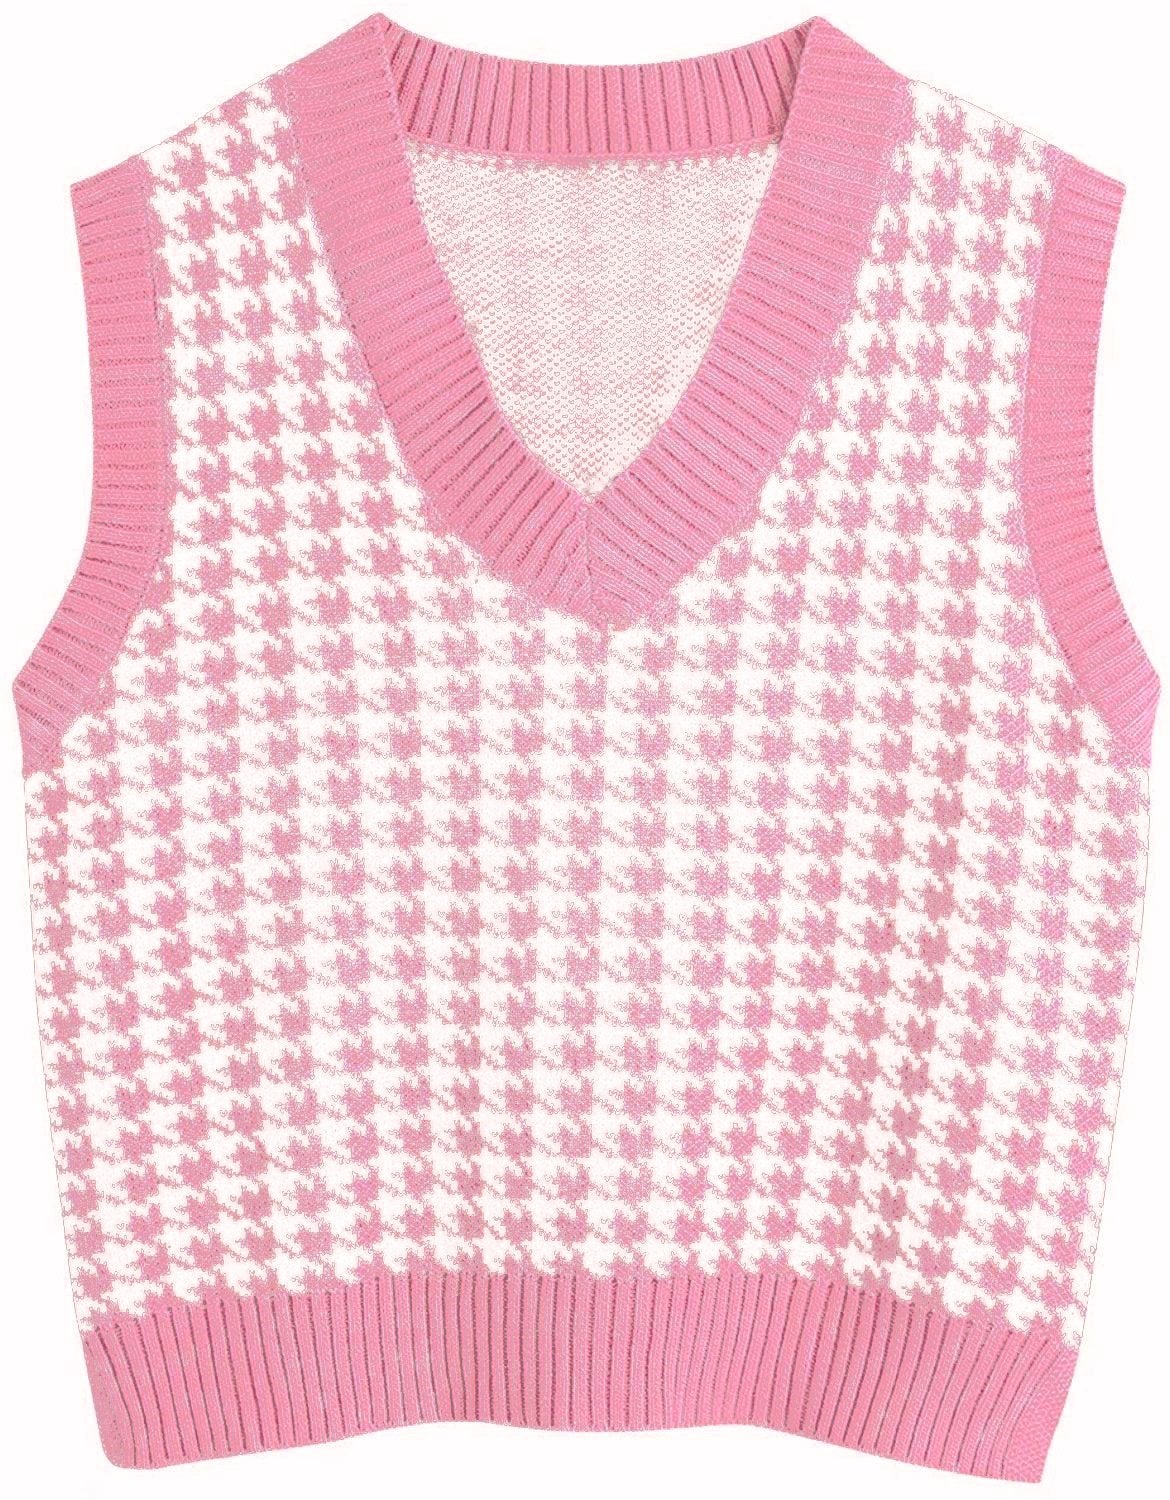 Fashion Sleeveless Women Knitting Vest-Shirts & Tops-JEWELRYSHEOWN